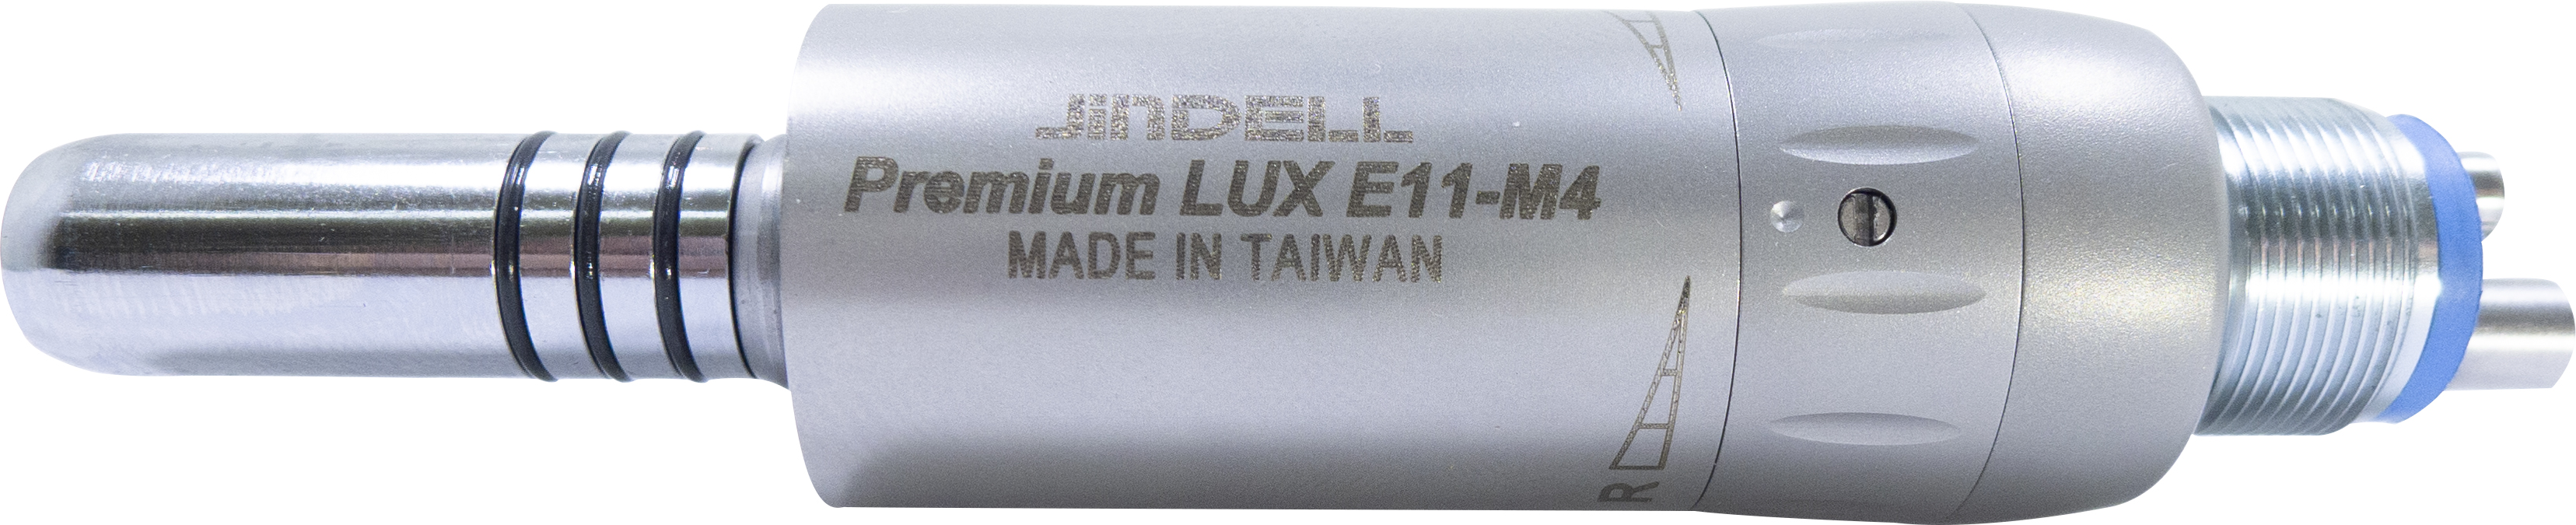 Premium LUX E11-M4   Internal water Stainless Steel Air Motor